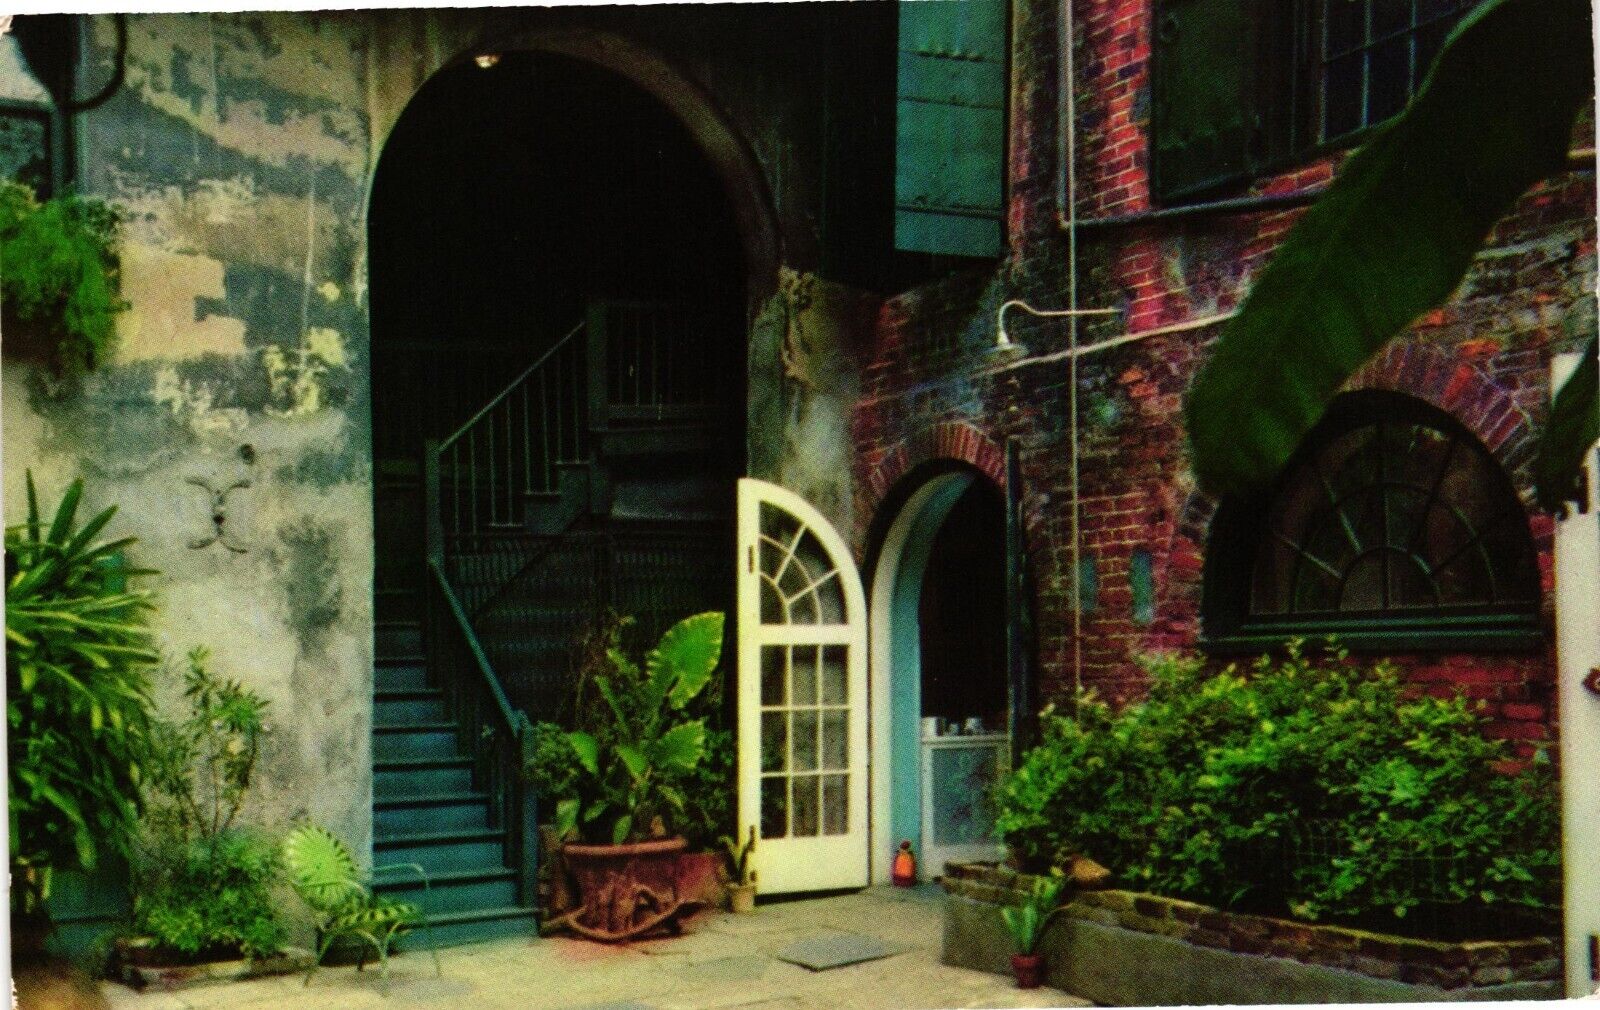 Brulatour Courtyard At 520 Royal St. New Orleans LA Vintage Postcard c1950